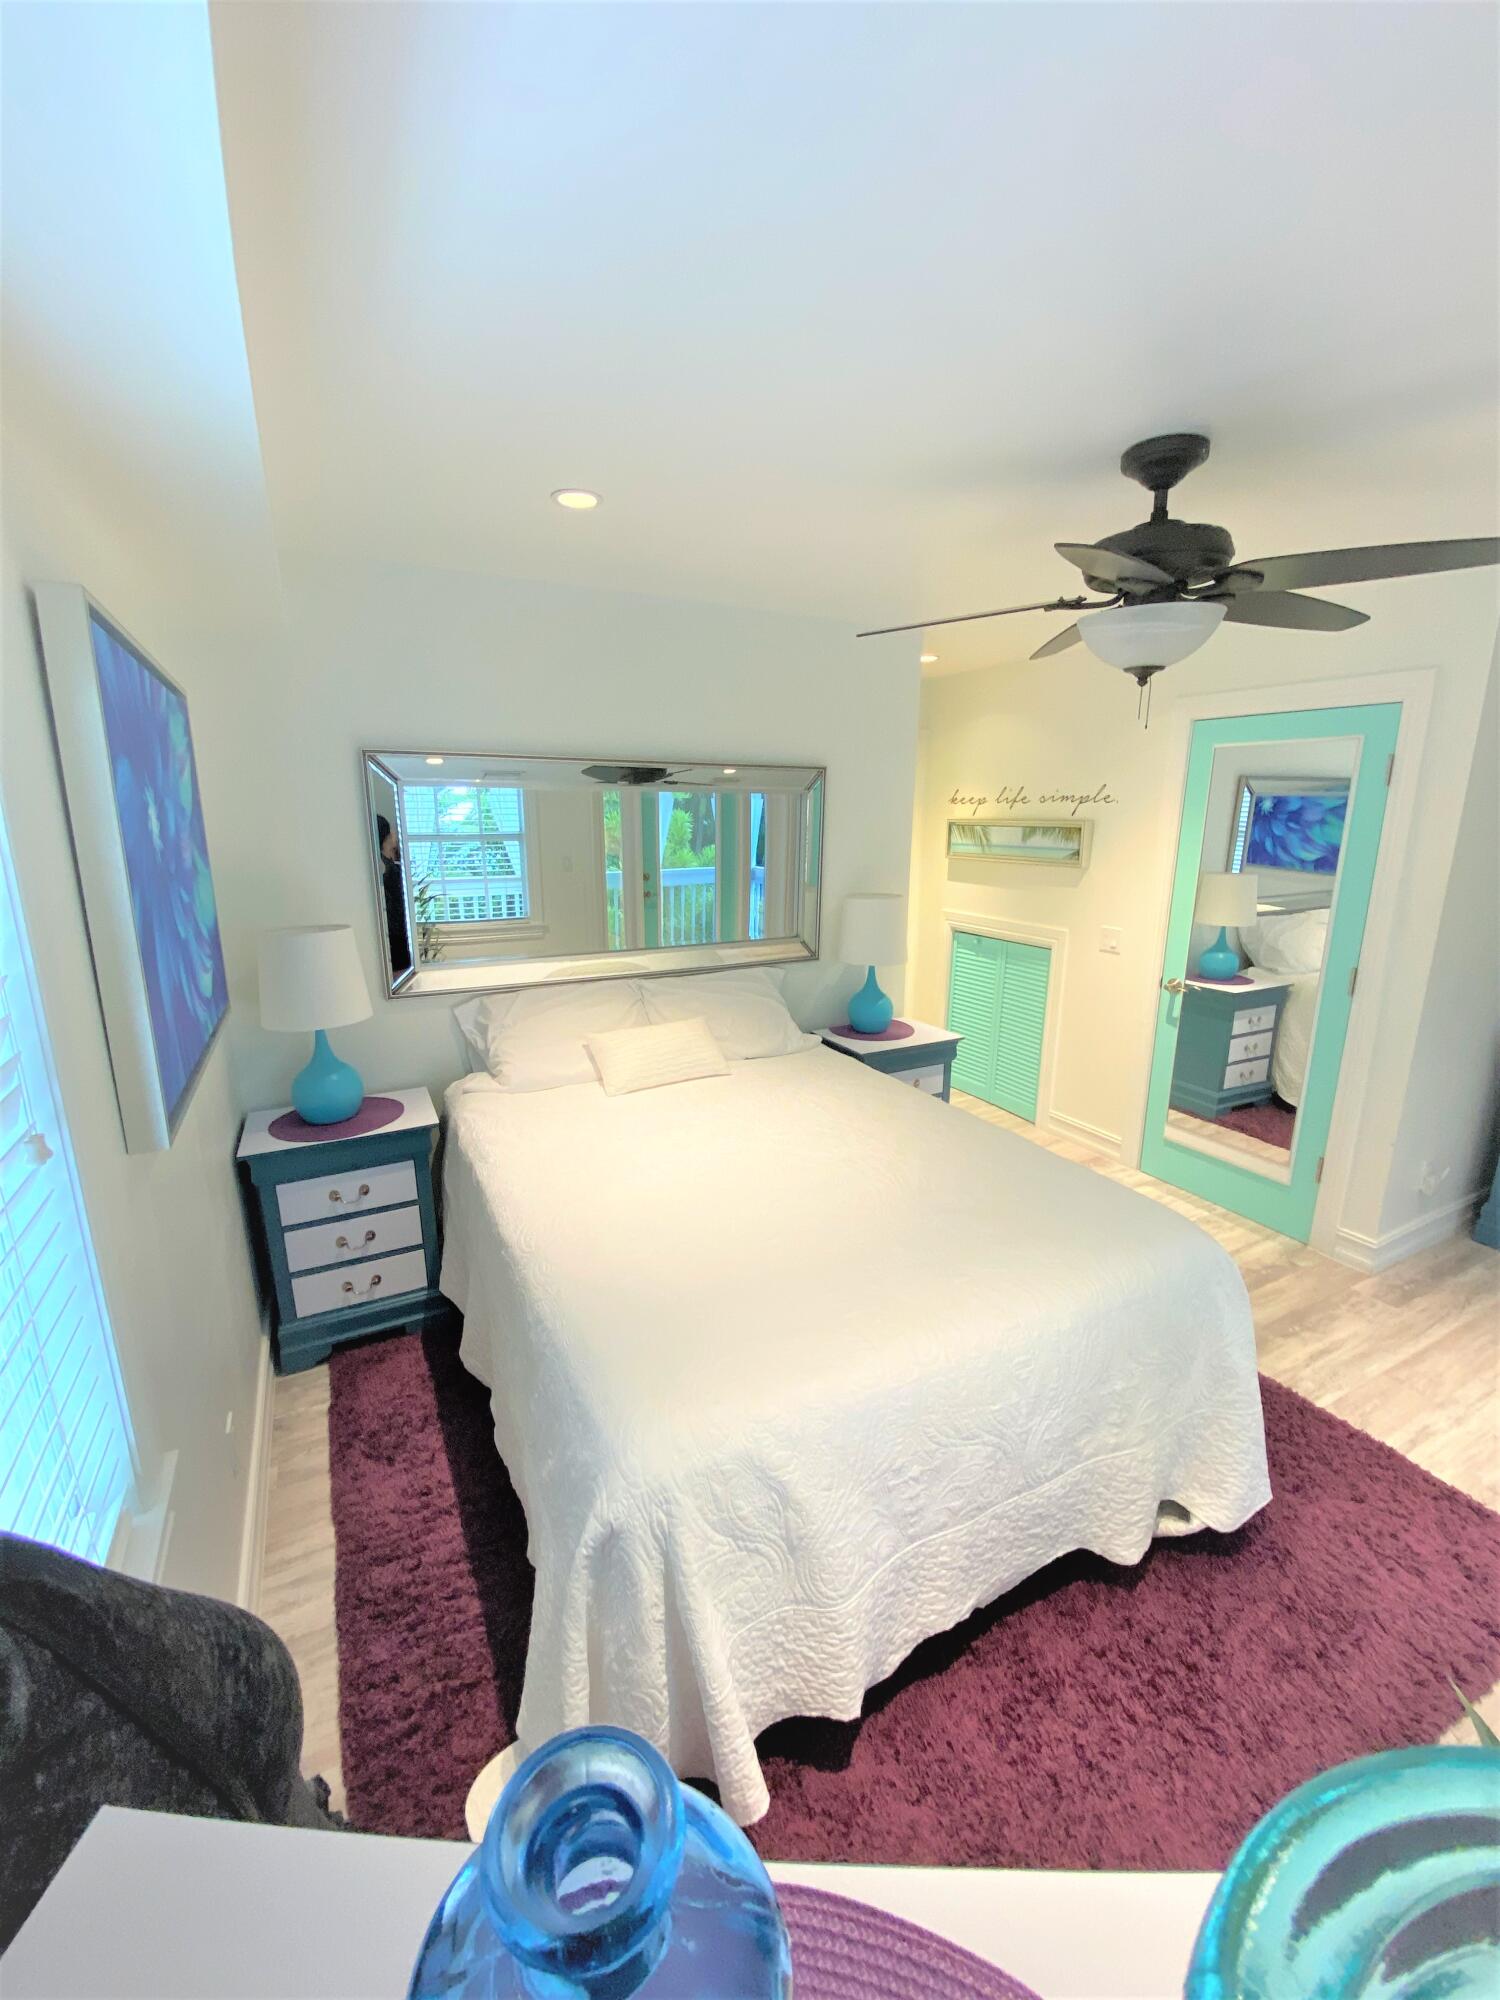 711 Georgia Street, Key West, Florida, 33040, United States, 3 Bedrooms Bedrooms, ,3 BathroomsBathrooms,Residential,For Sale,711 georgia ST,1435788